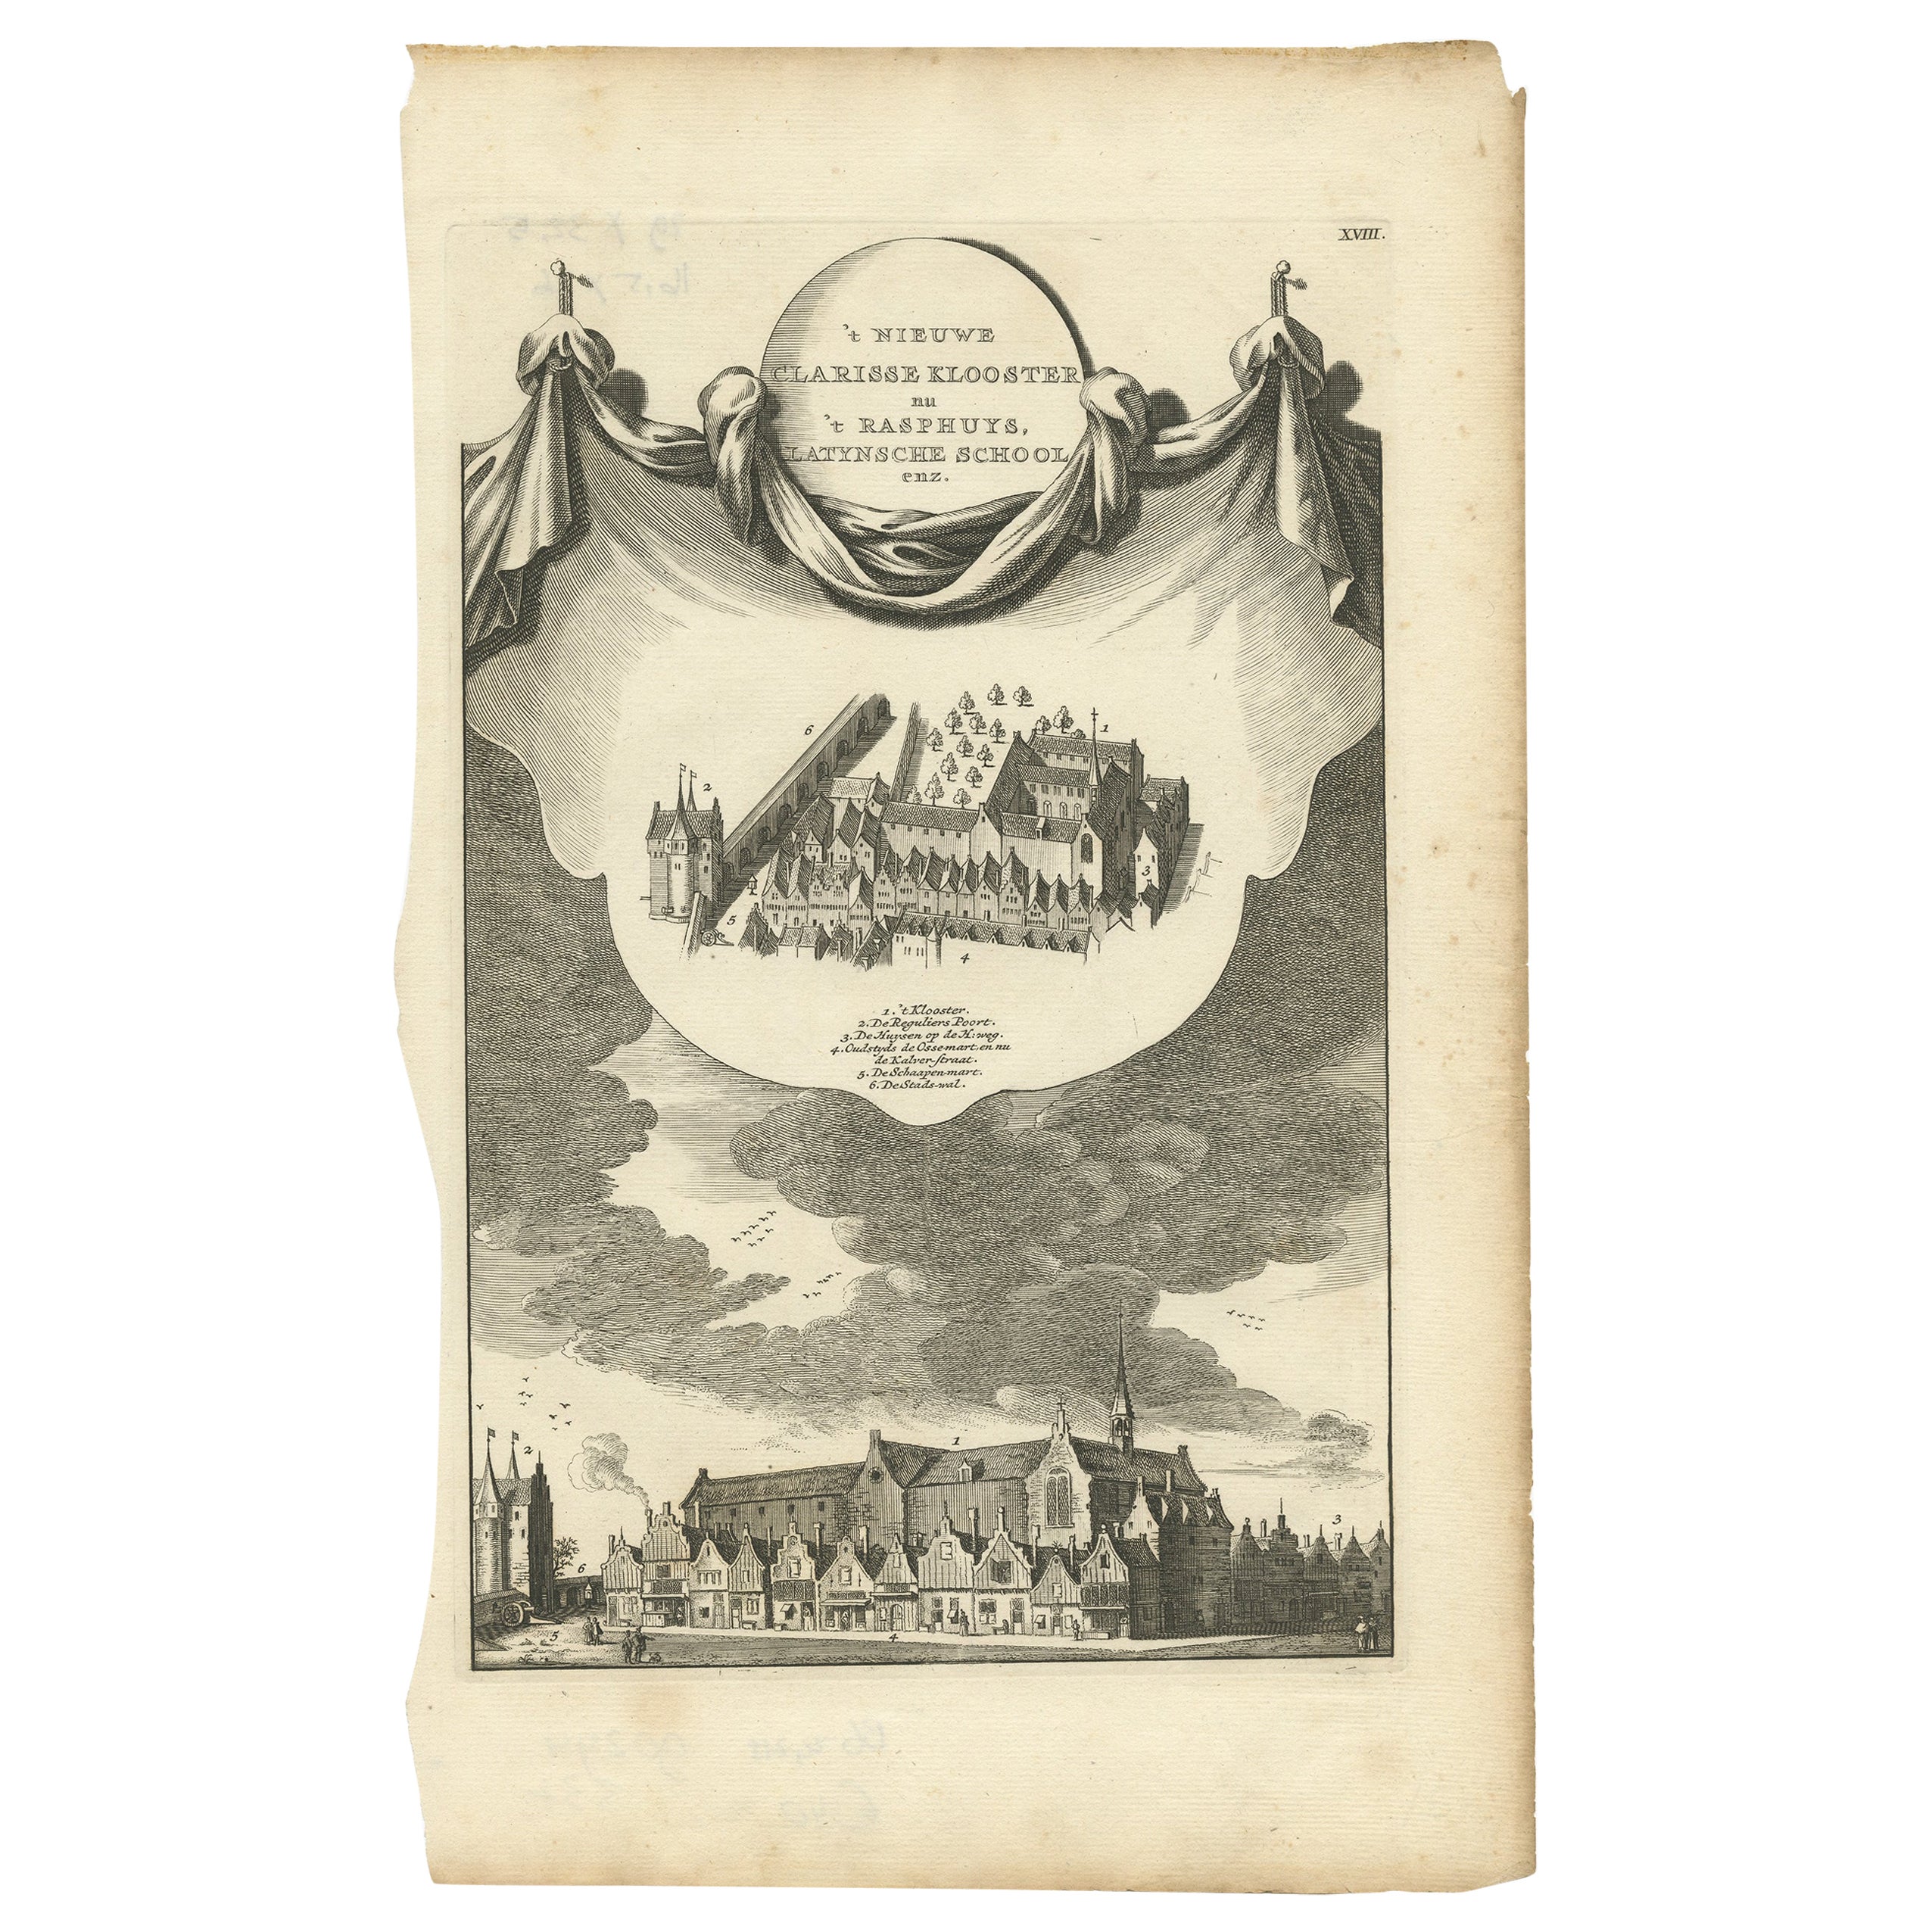 Antique Print of the Clarisse Monastery in Amsterdam, c.1760